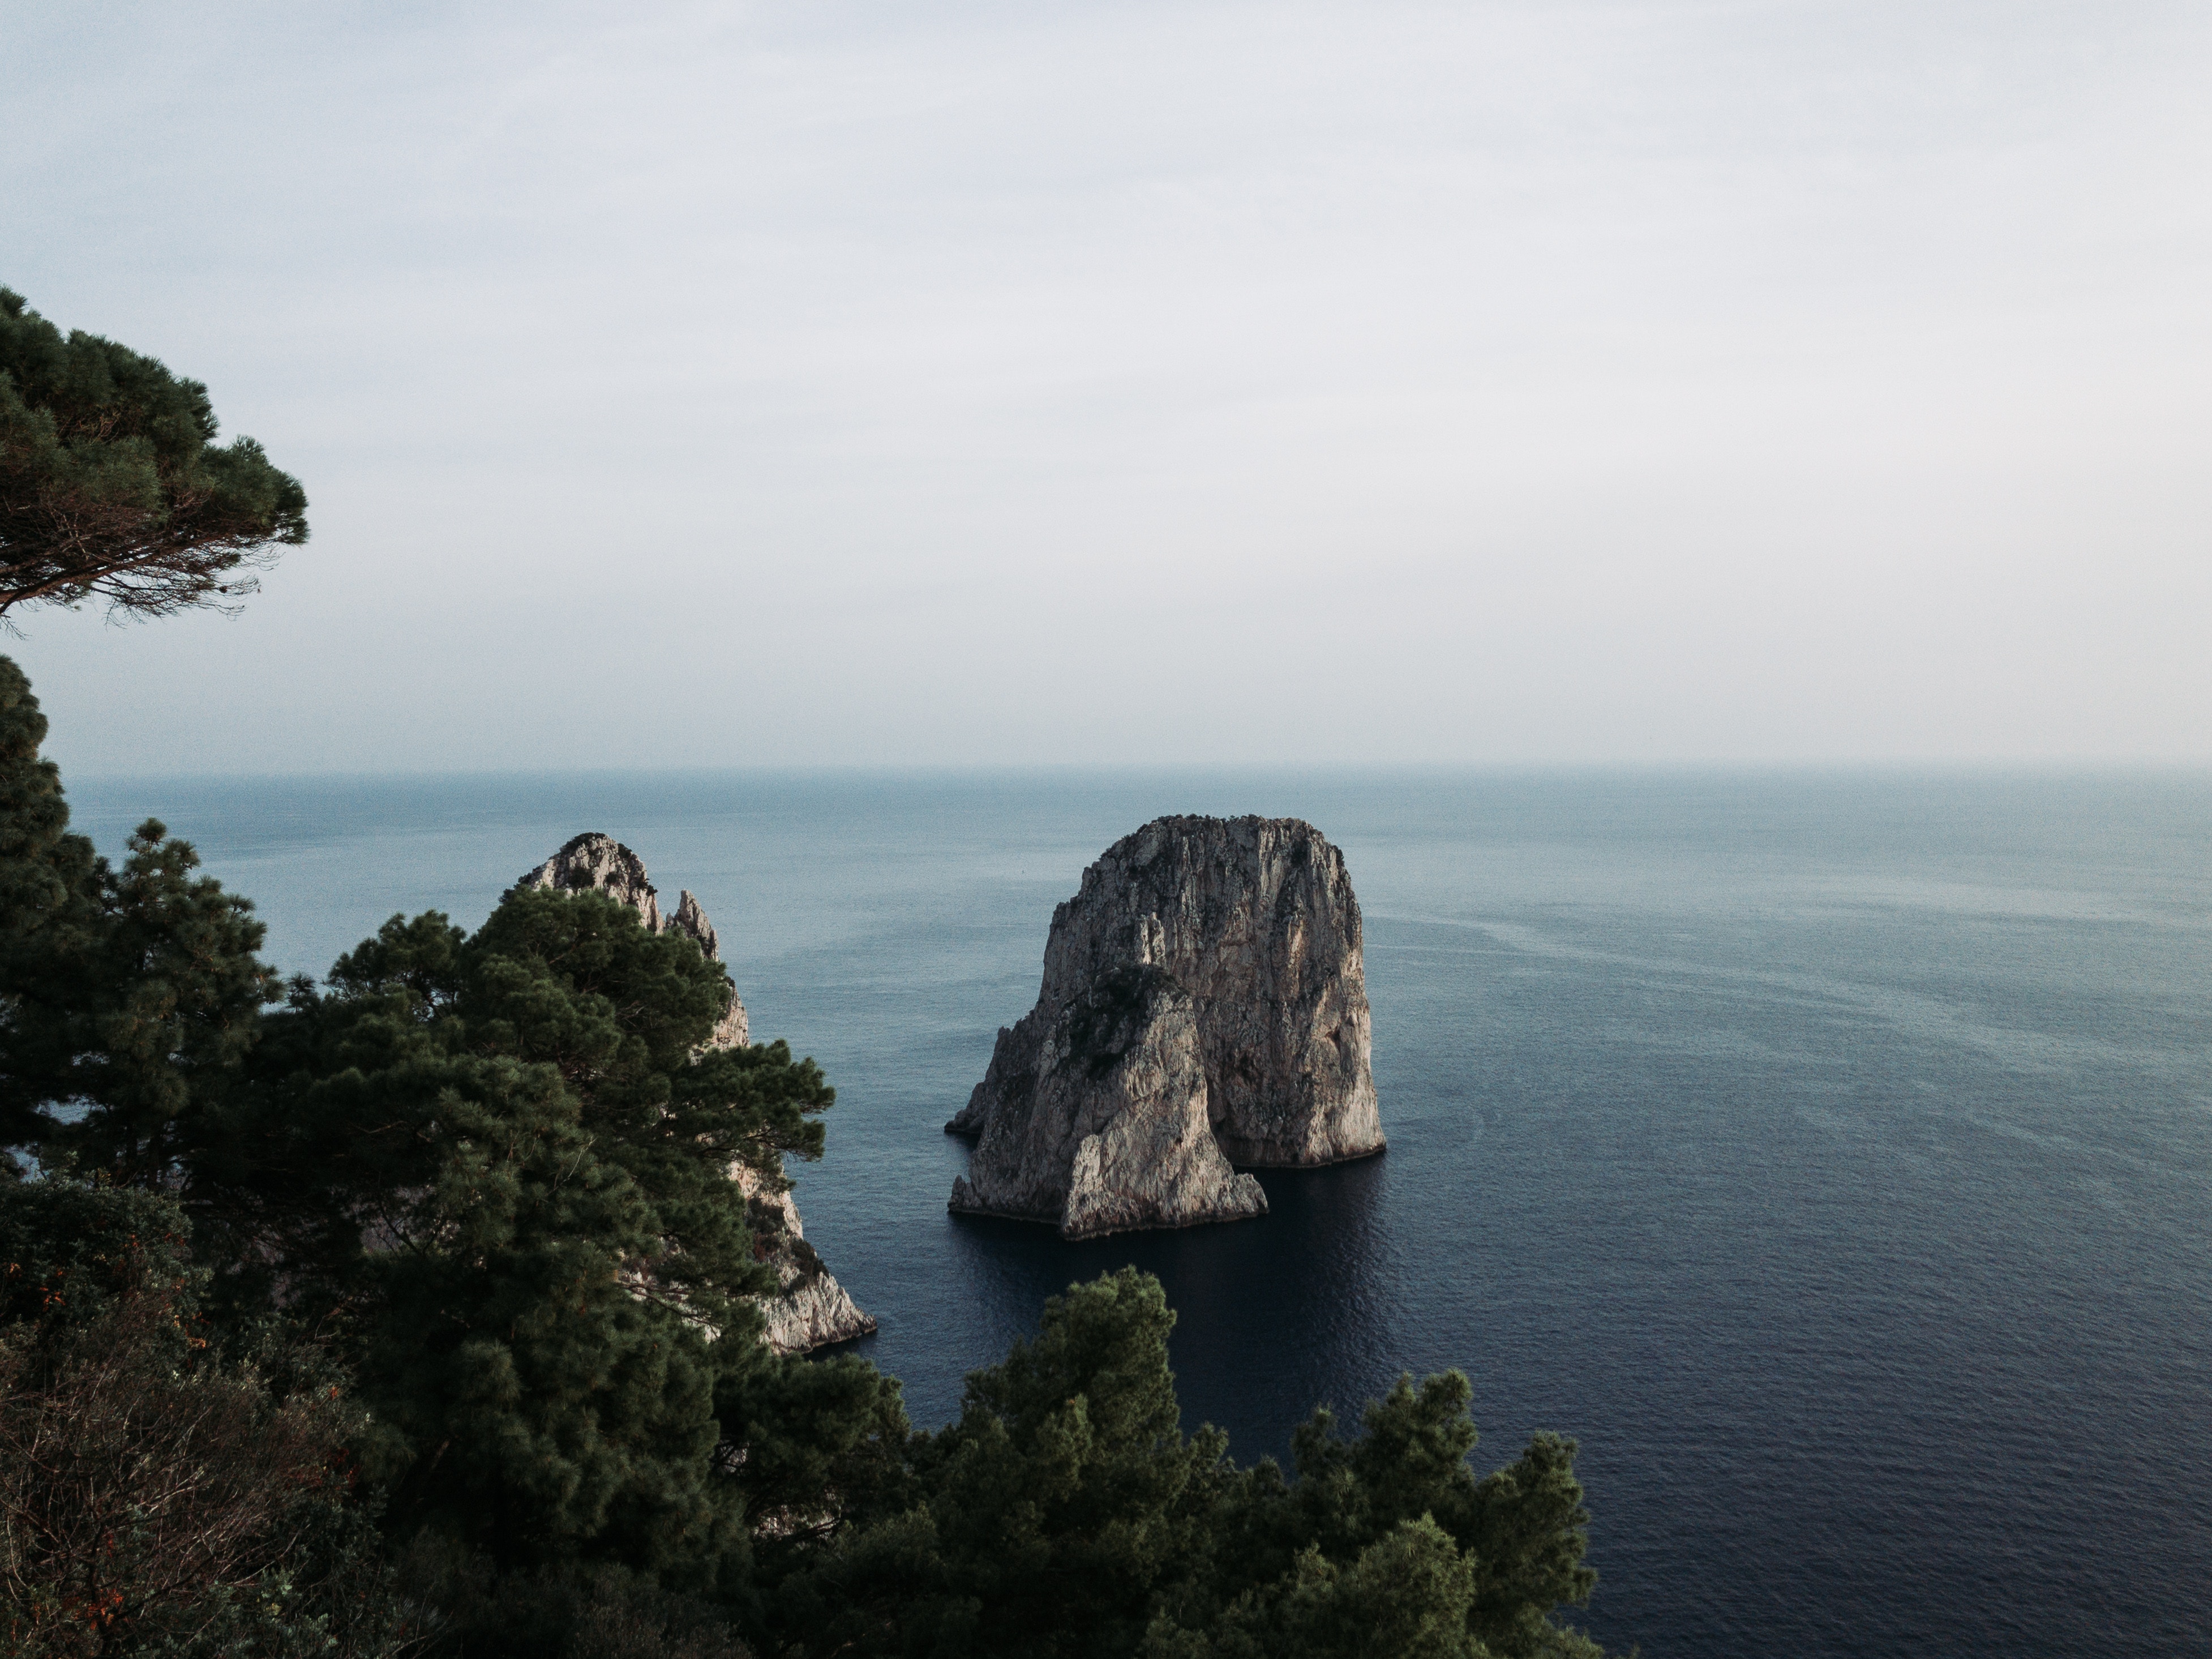 Add the island of Capri to your Amalfi Coast itinerary.